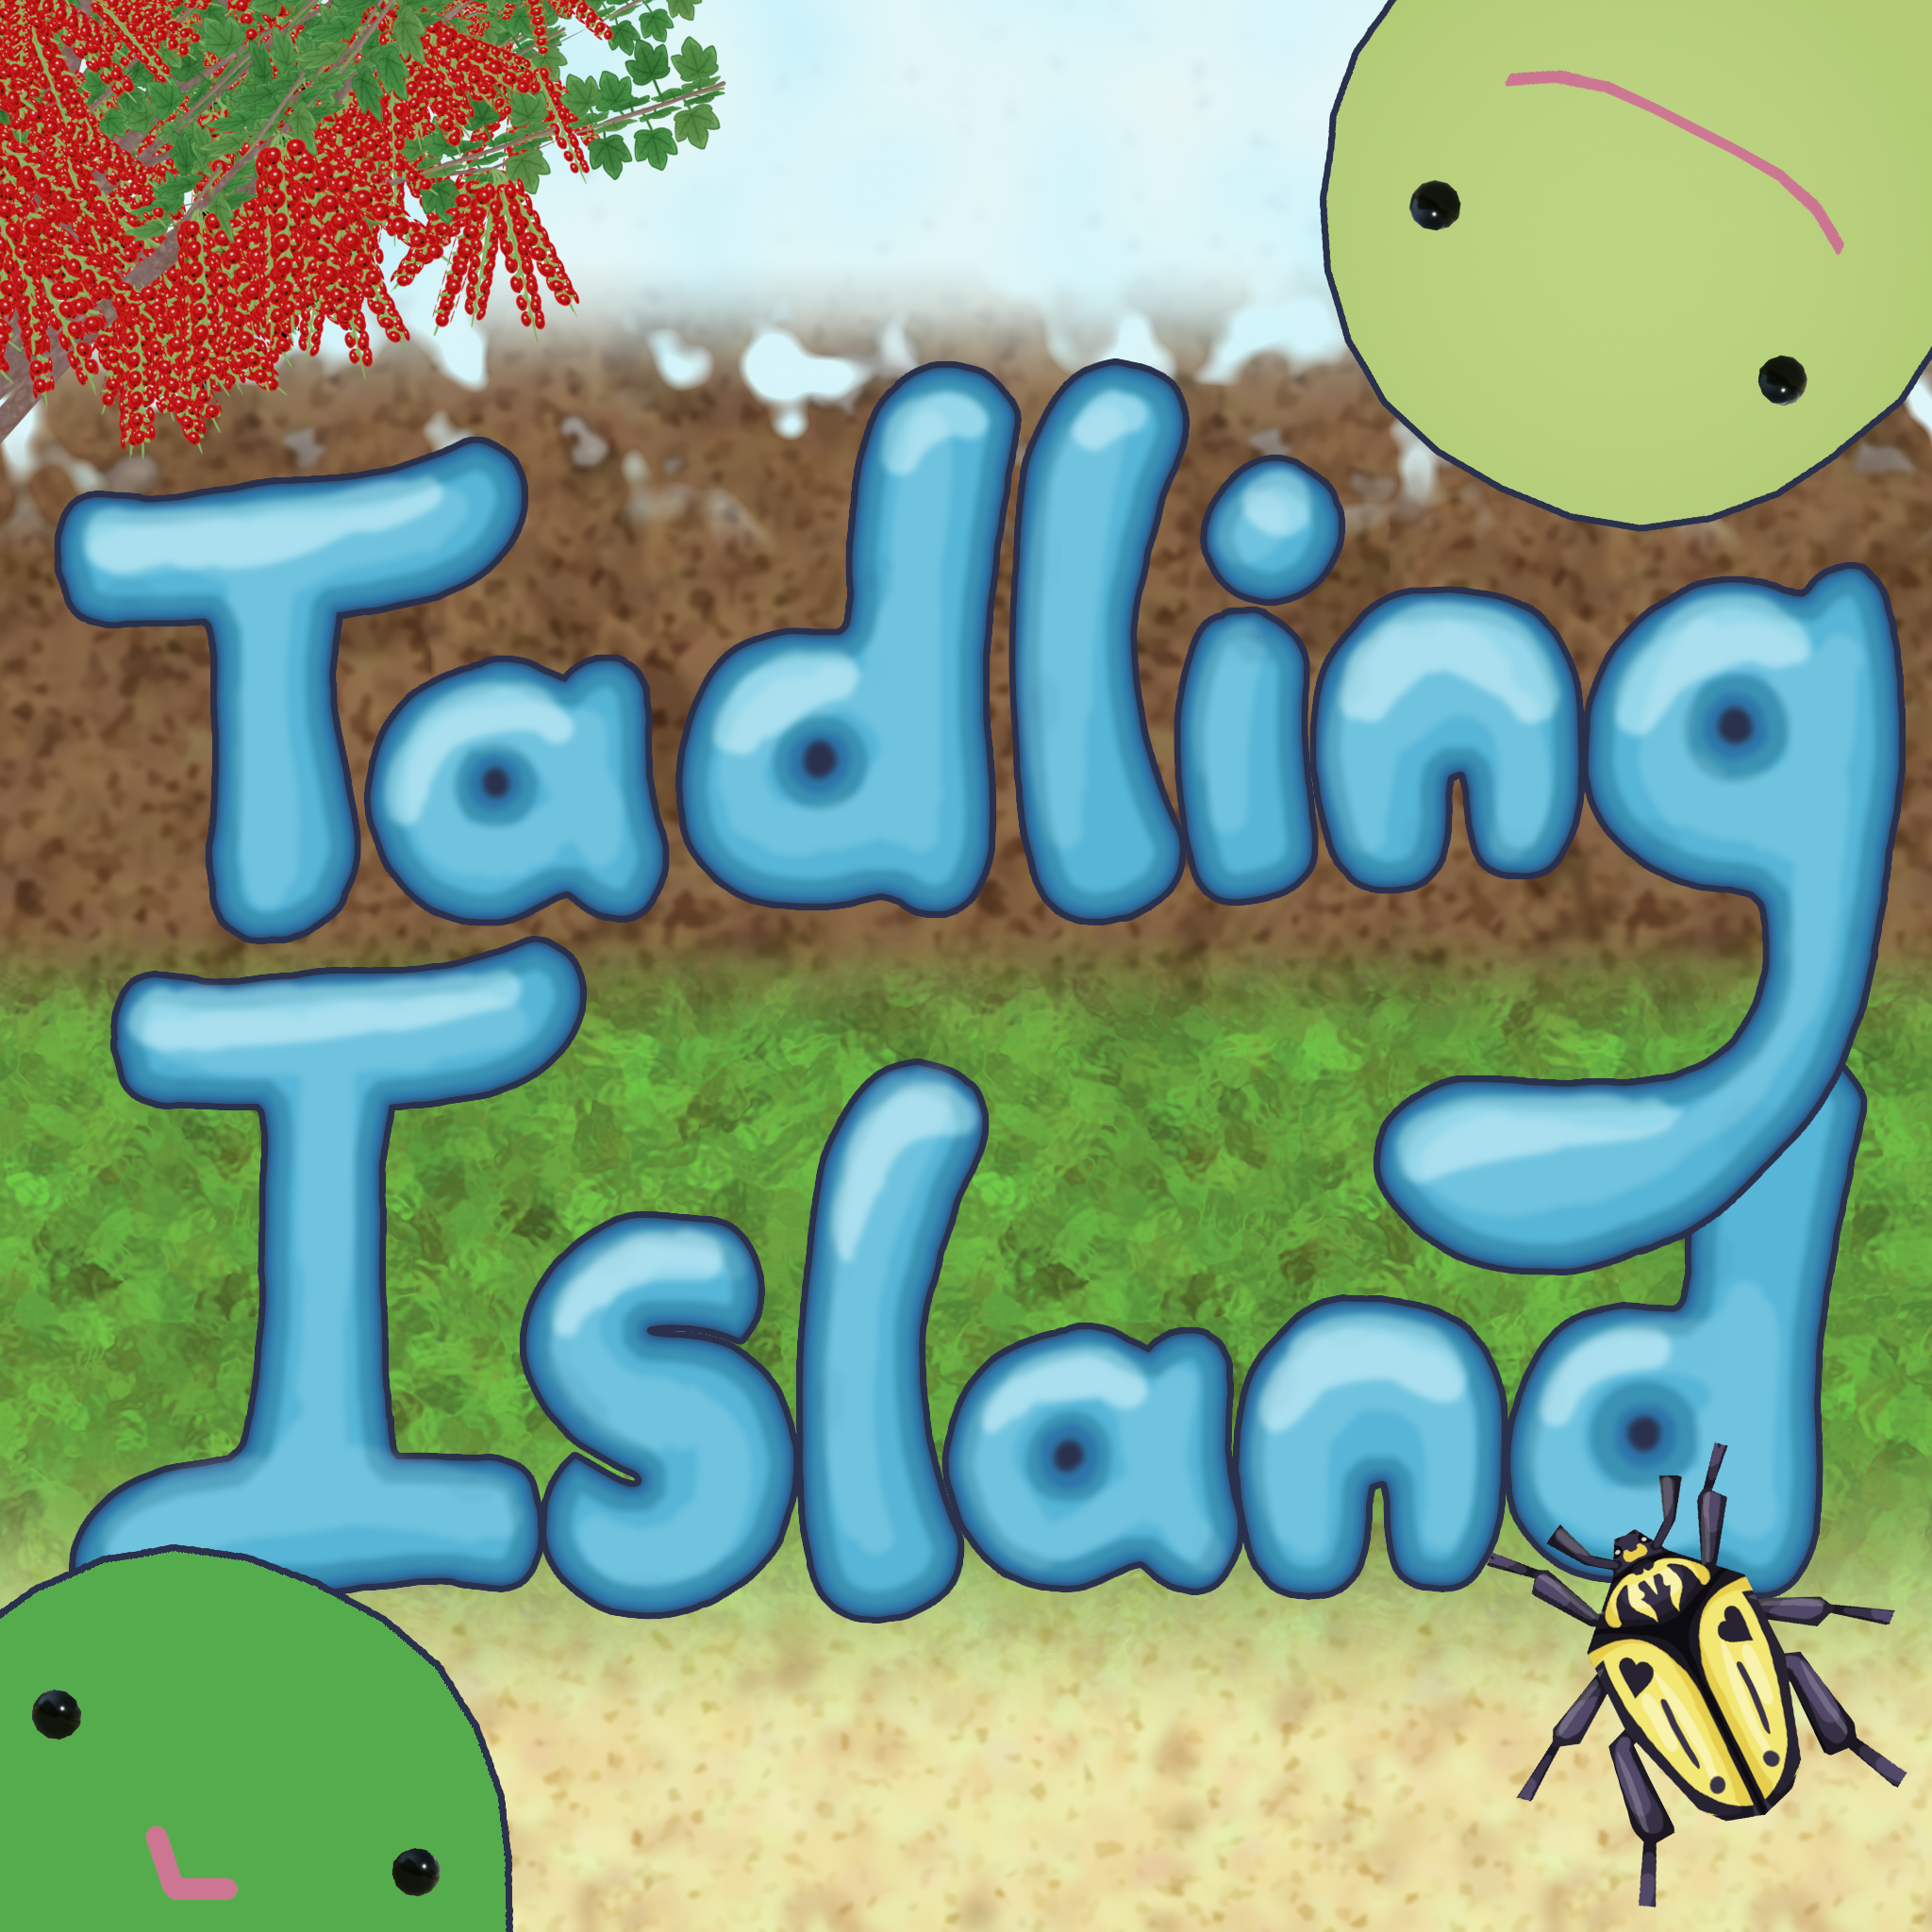 Tadling Island